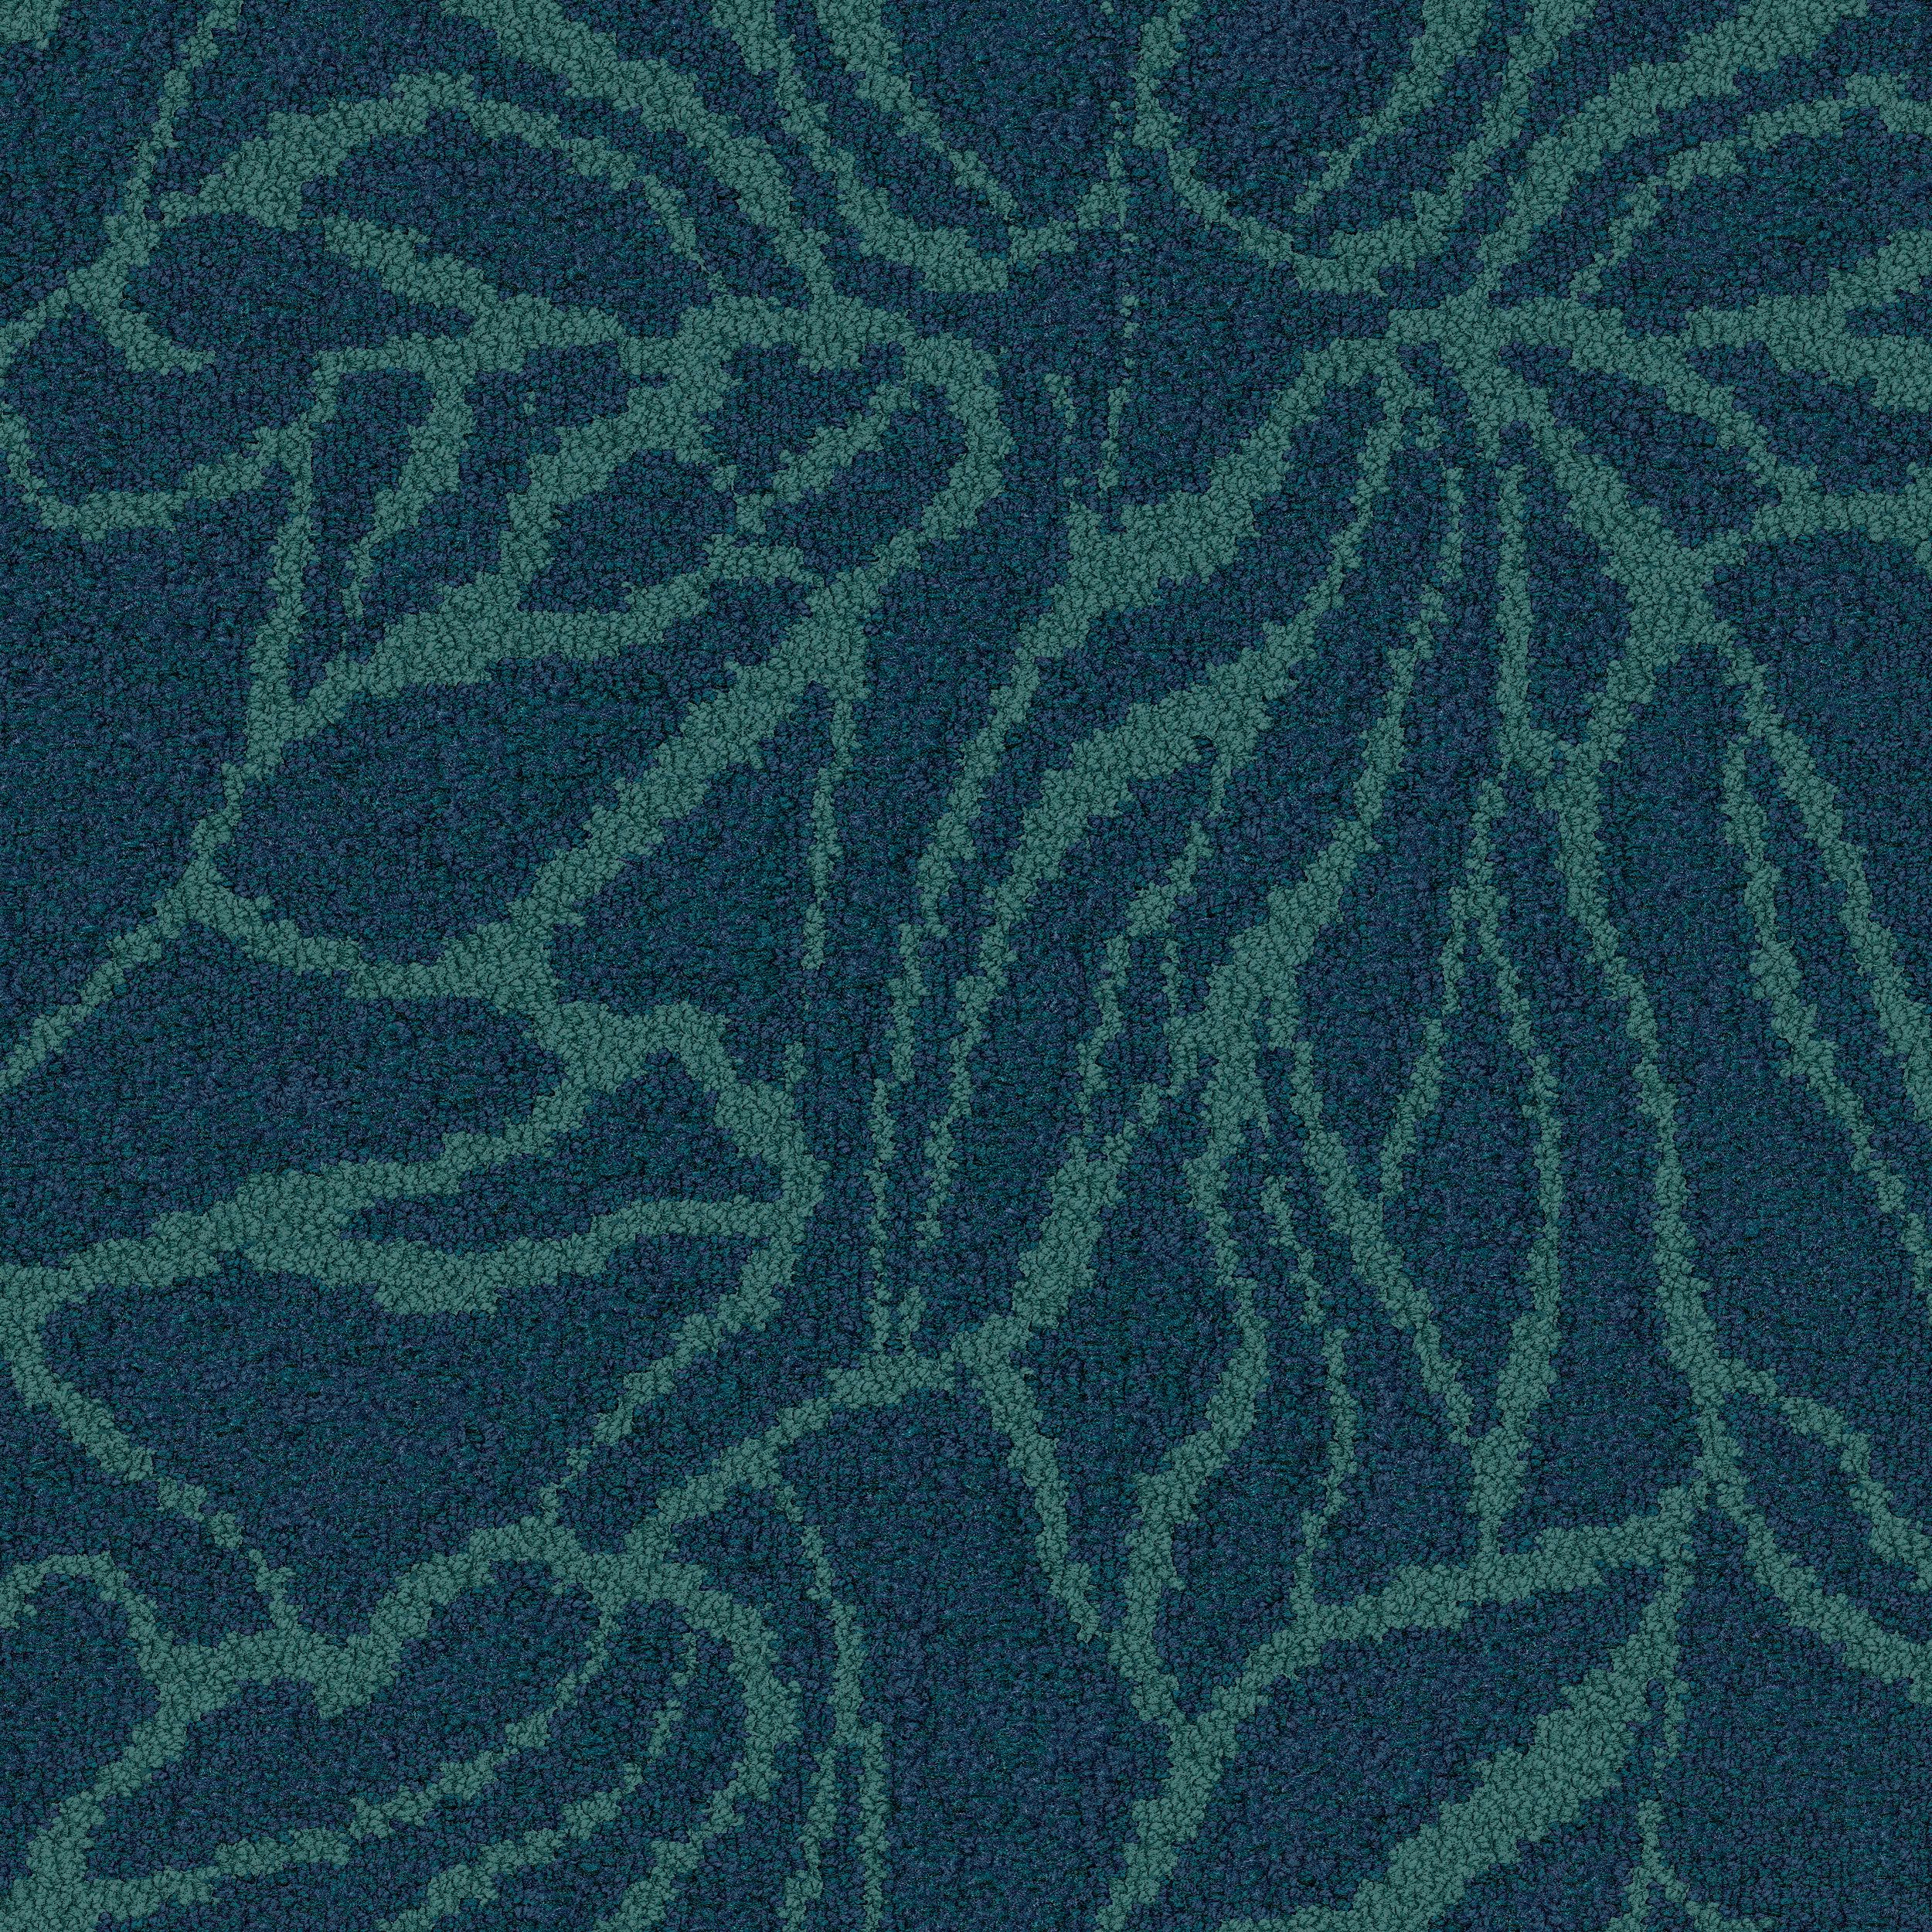 LC05 Carpet Tile in Aqua número de imagen 1